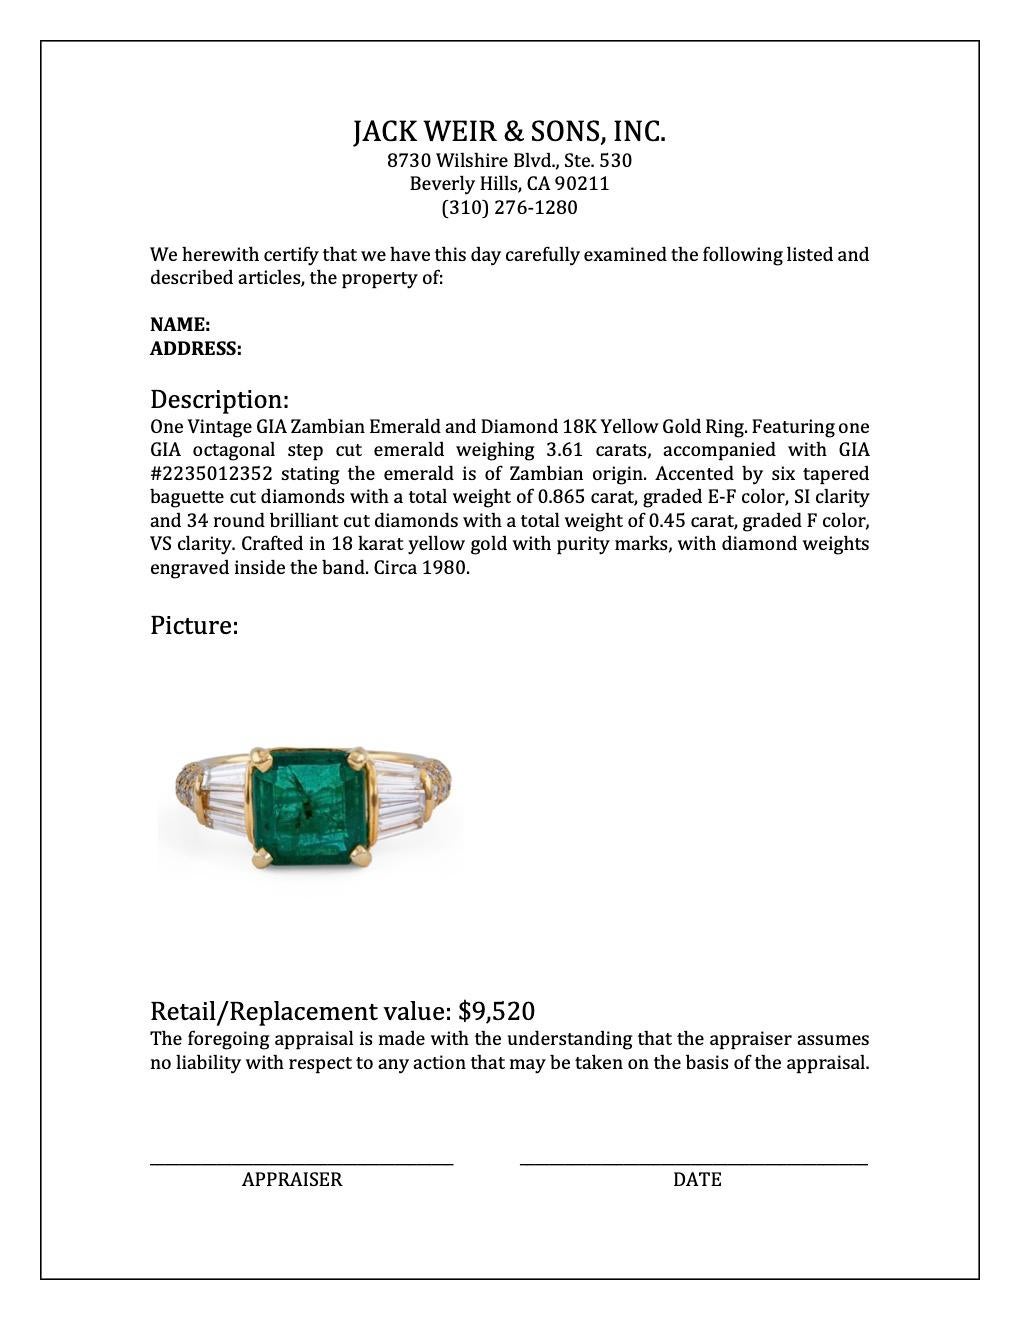 Vintage GIA Zambian Emerald and Diamond 18K Yellow Gold Ring 2